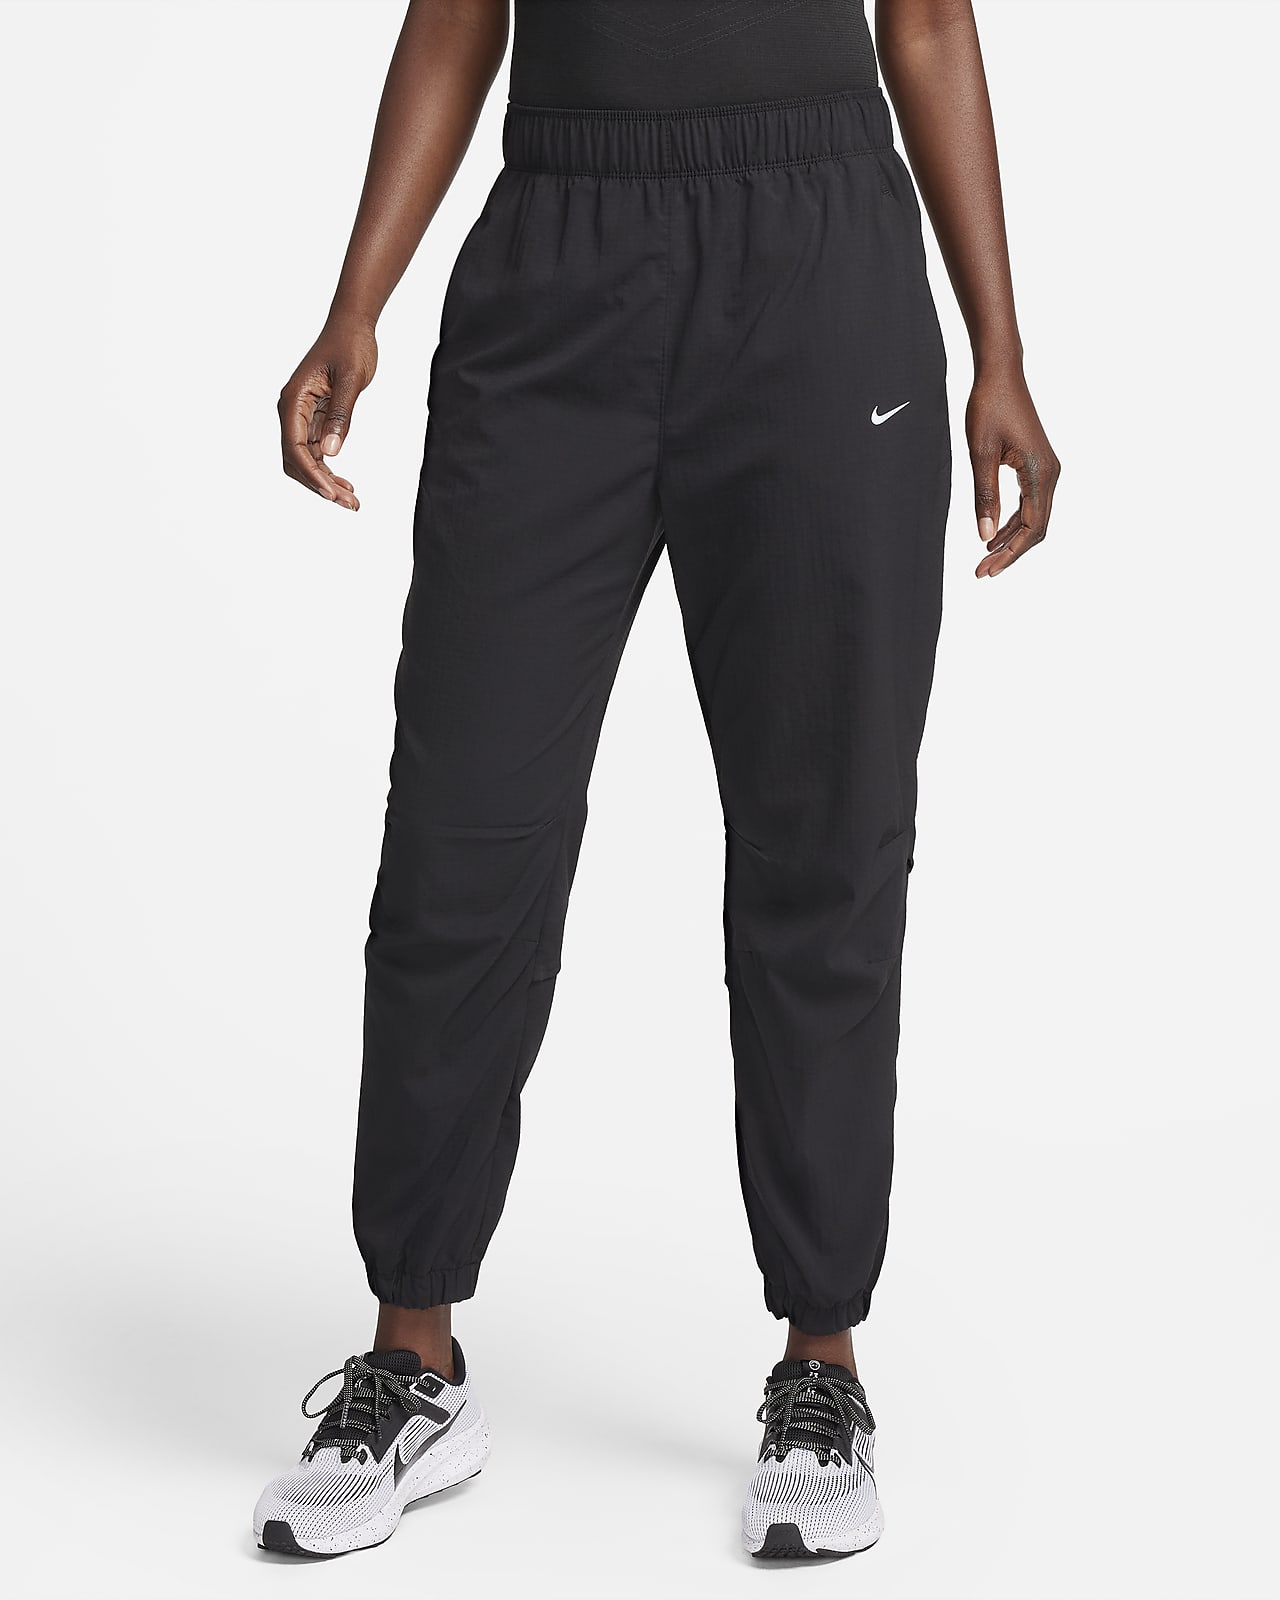 Calças de running de aquecimento a 7/8 de cintura normal Nike Dri-FIT Fast para mulher